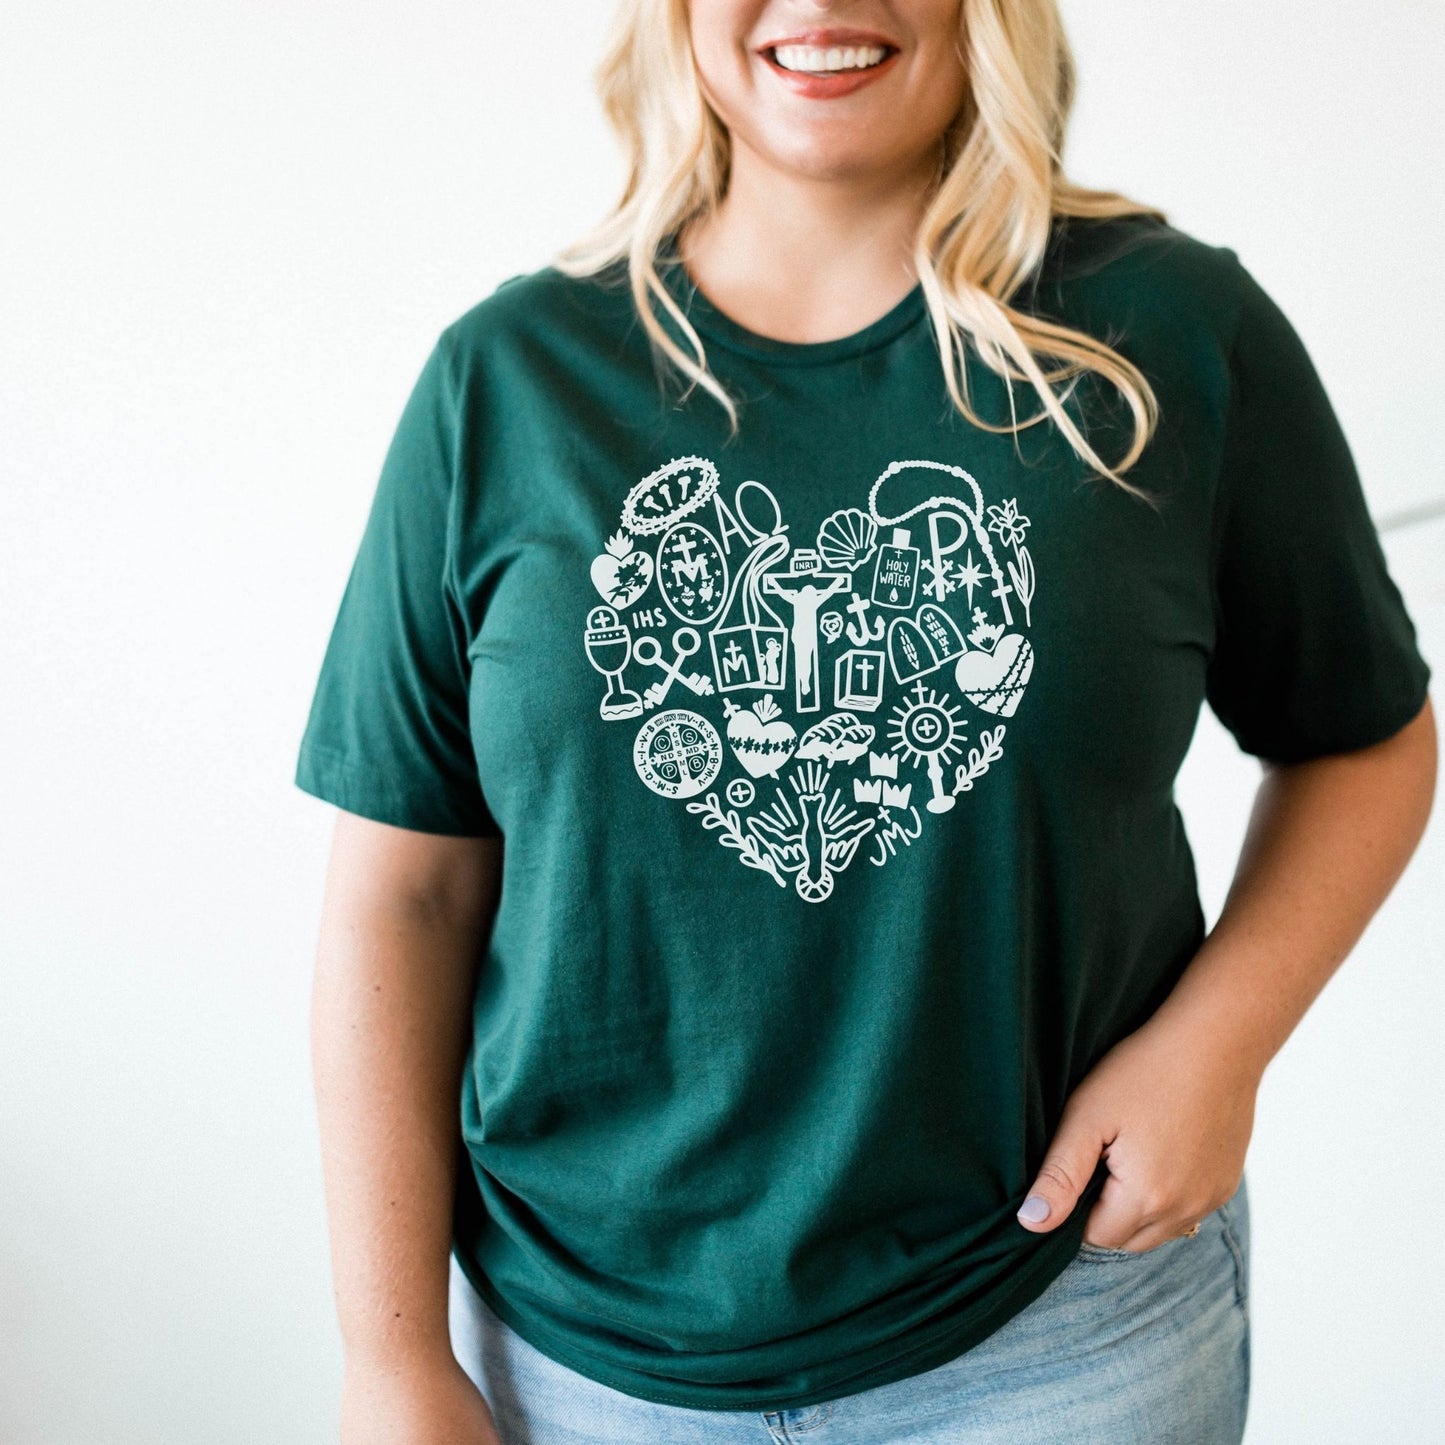 a woman wearing a green heart shaped t - shirt